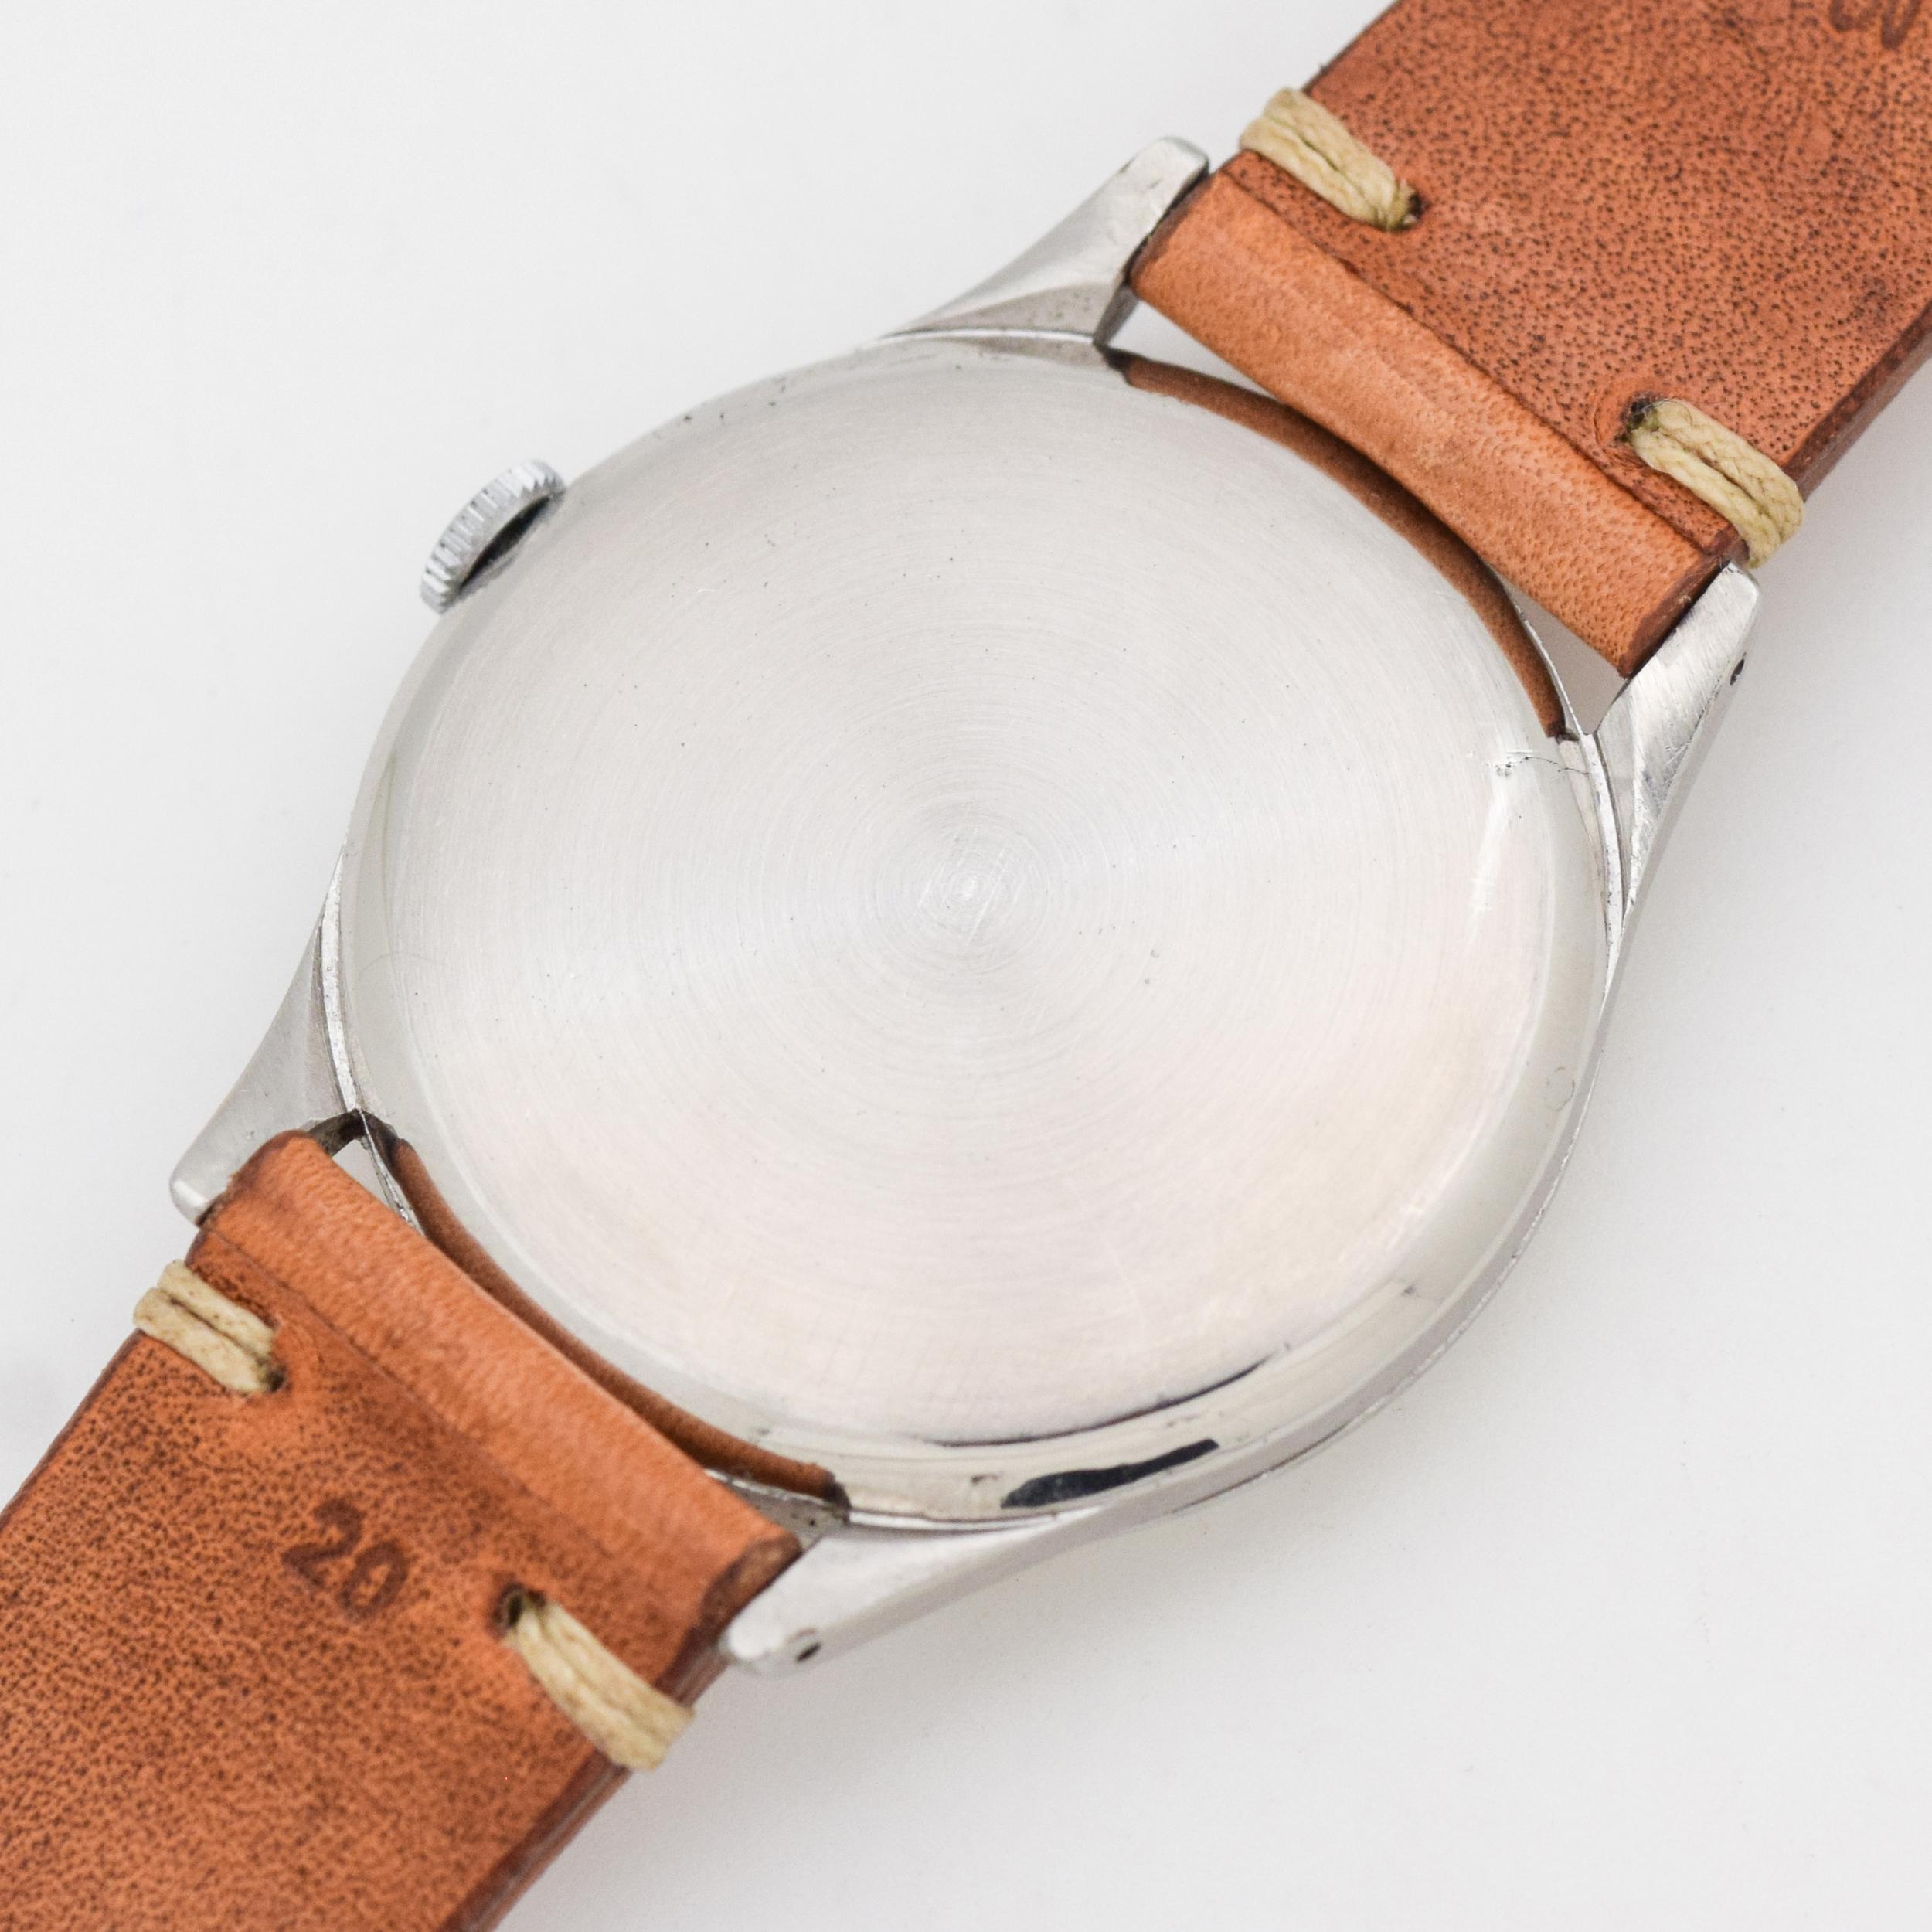 1947 omega watch